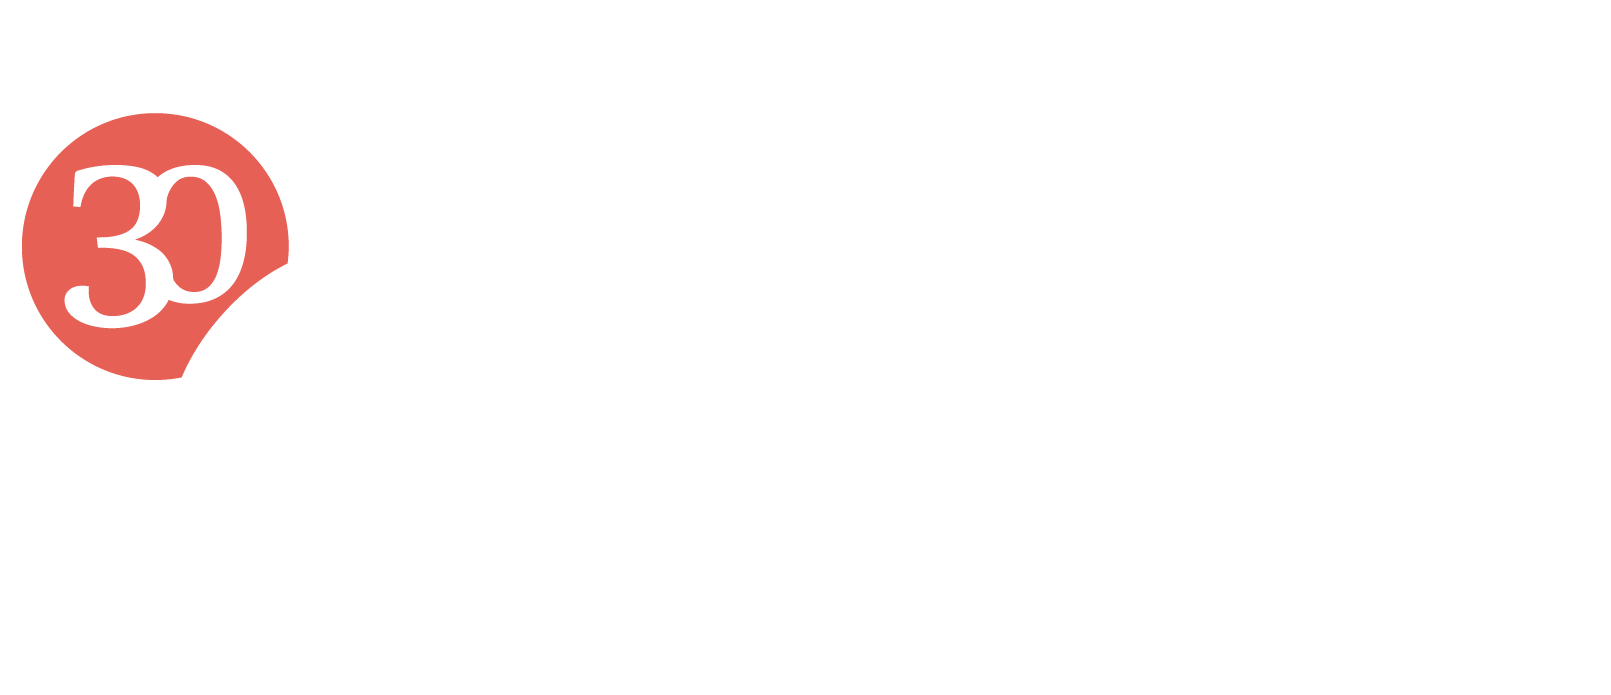 AmCham Slovakia